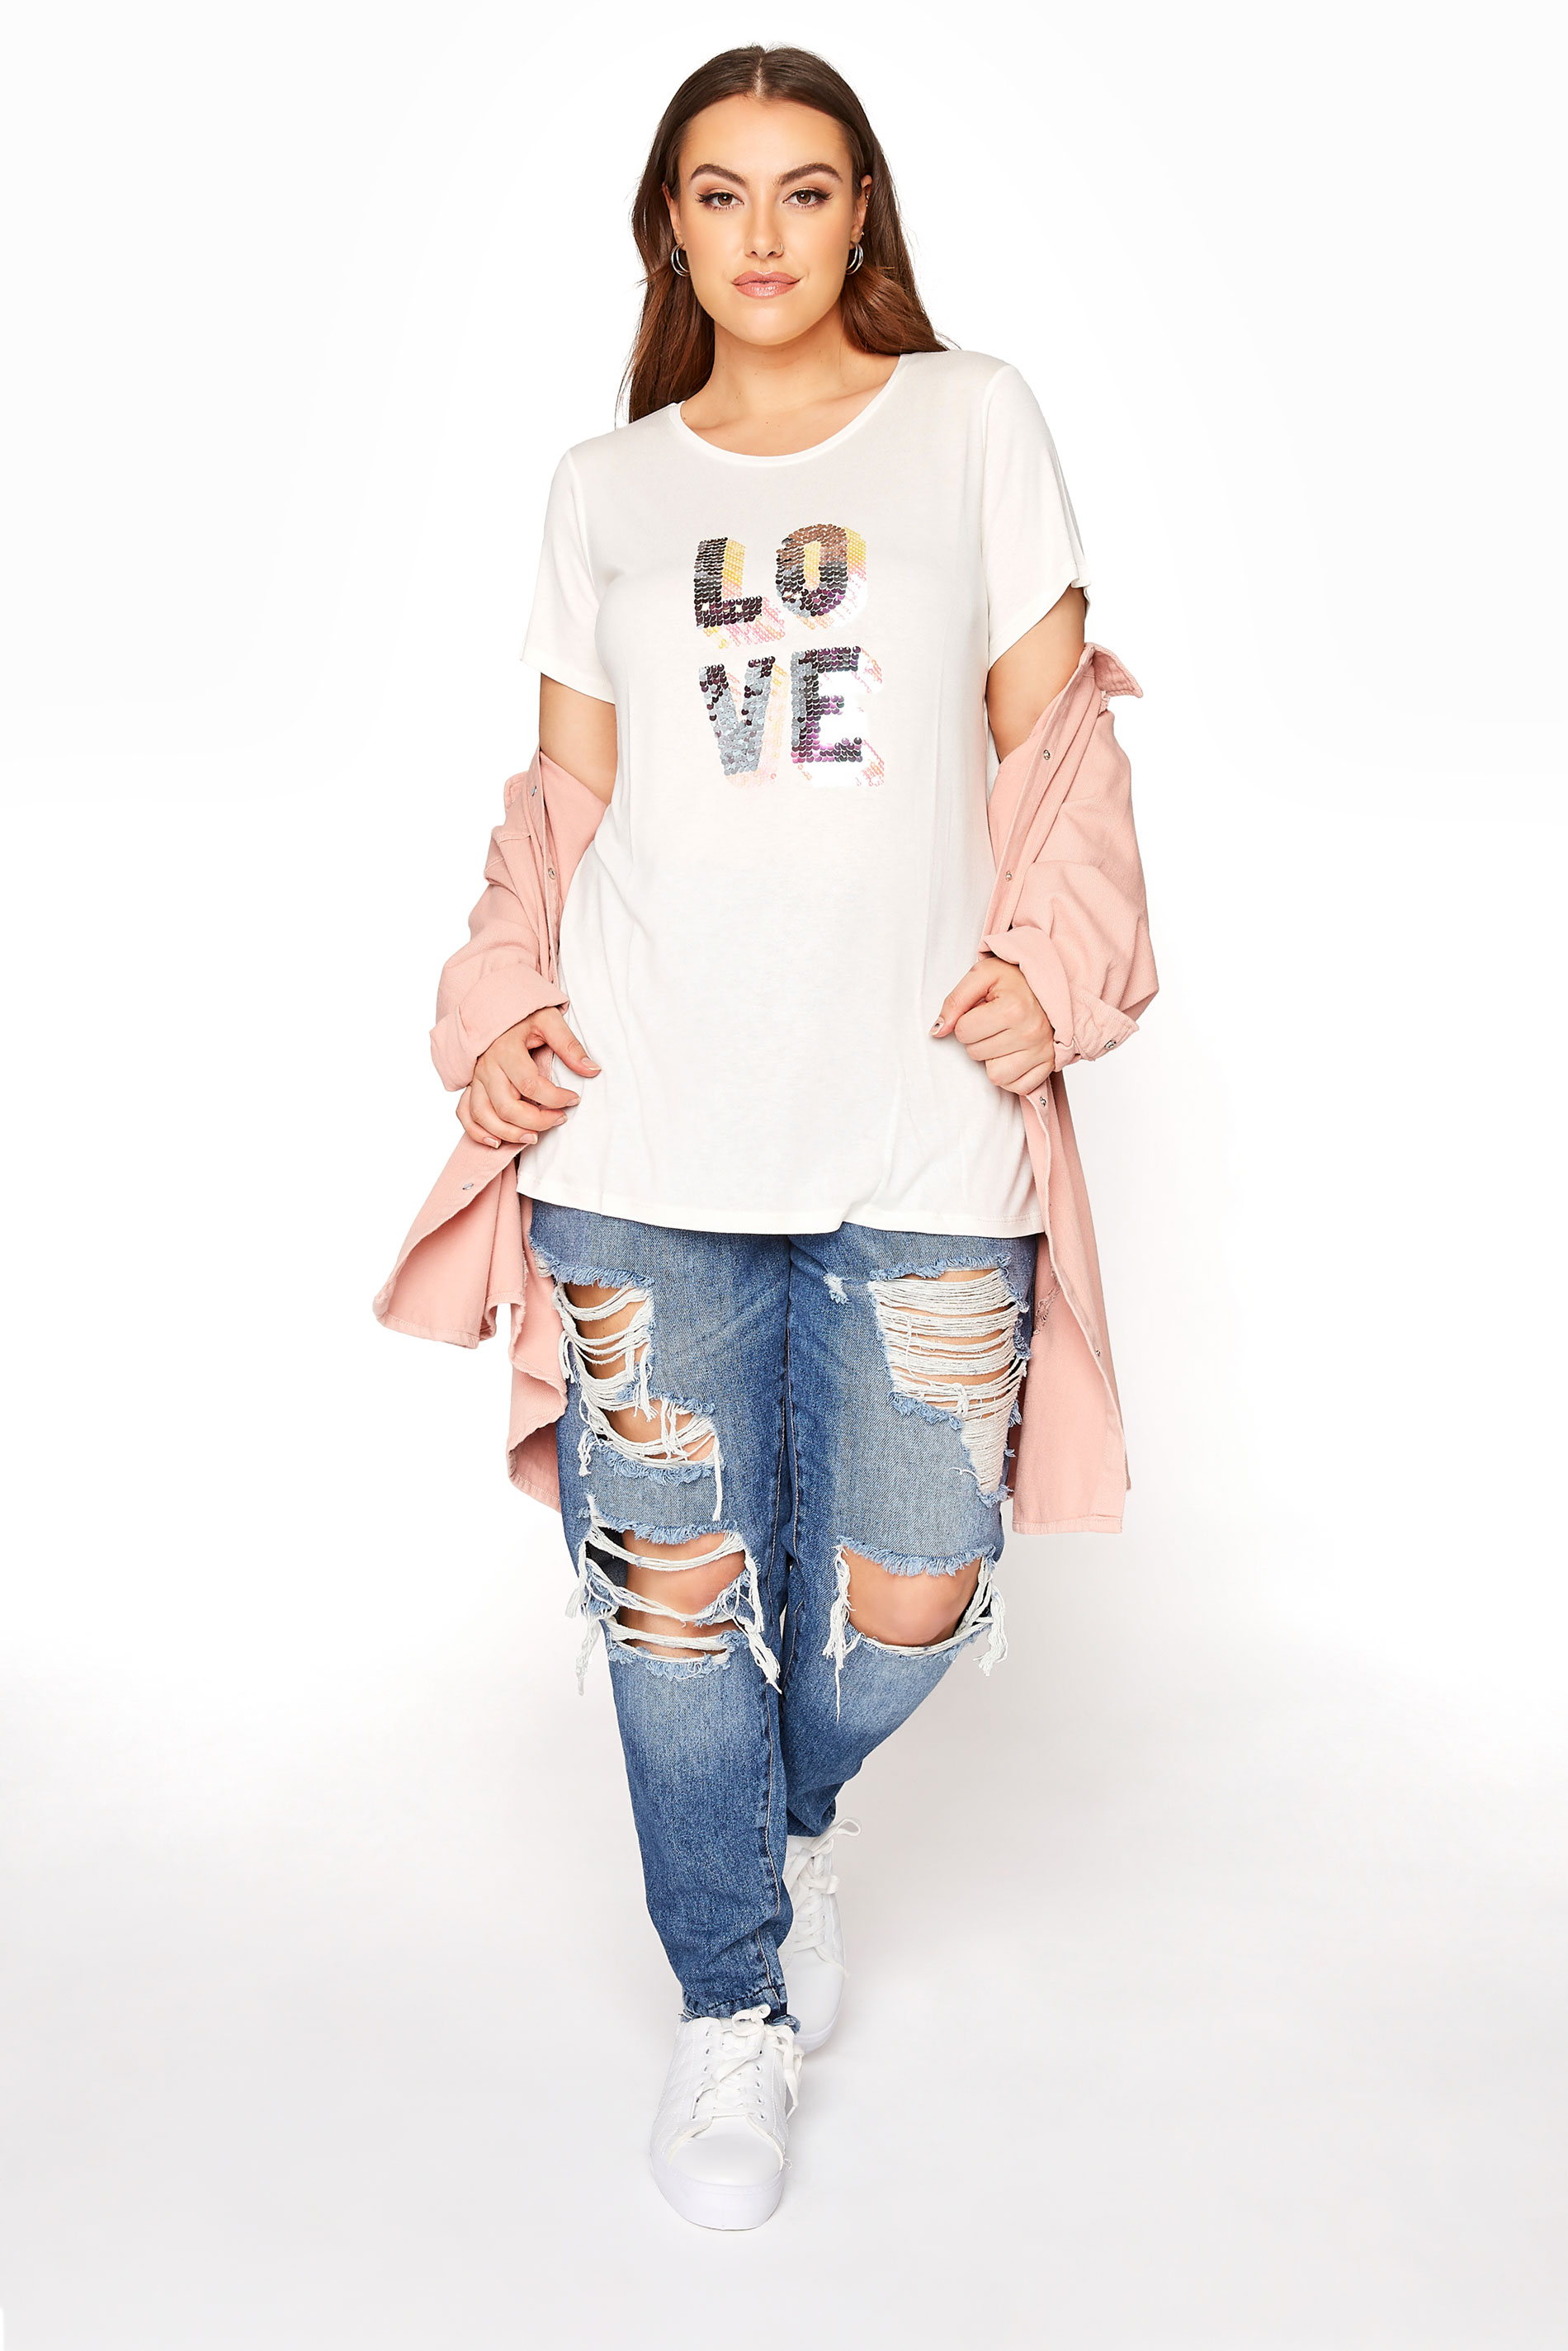 Grande taille  Tops Grande taille  Tops à Slogans | T-Shirt Blanc 'Love' Empiècement Sequins - WO74240